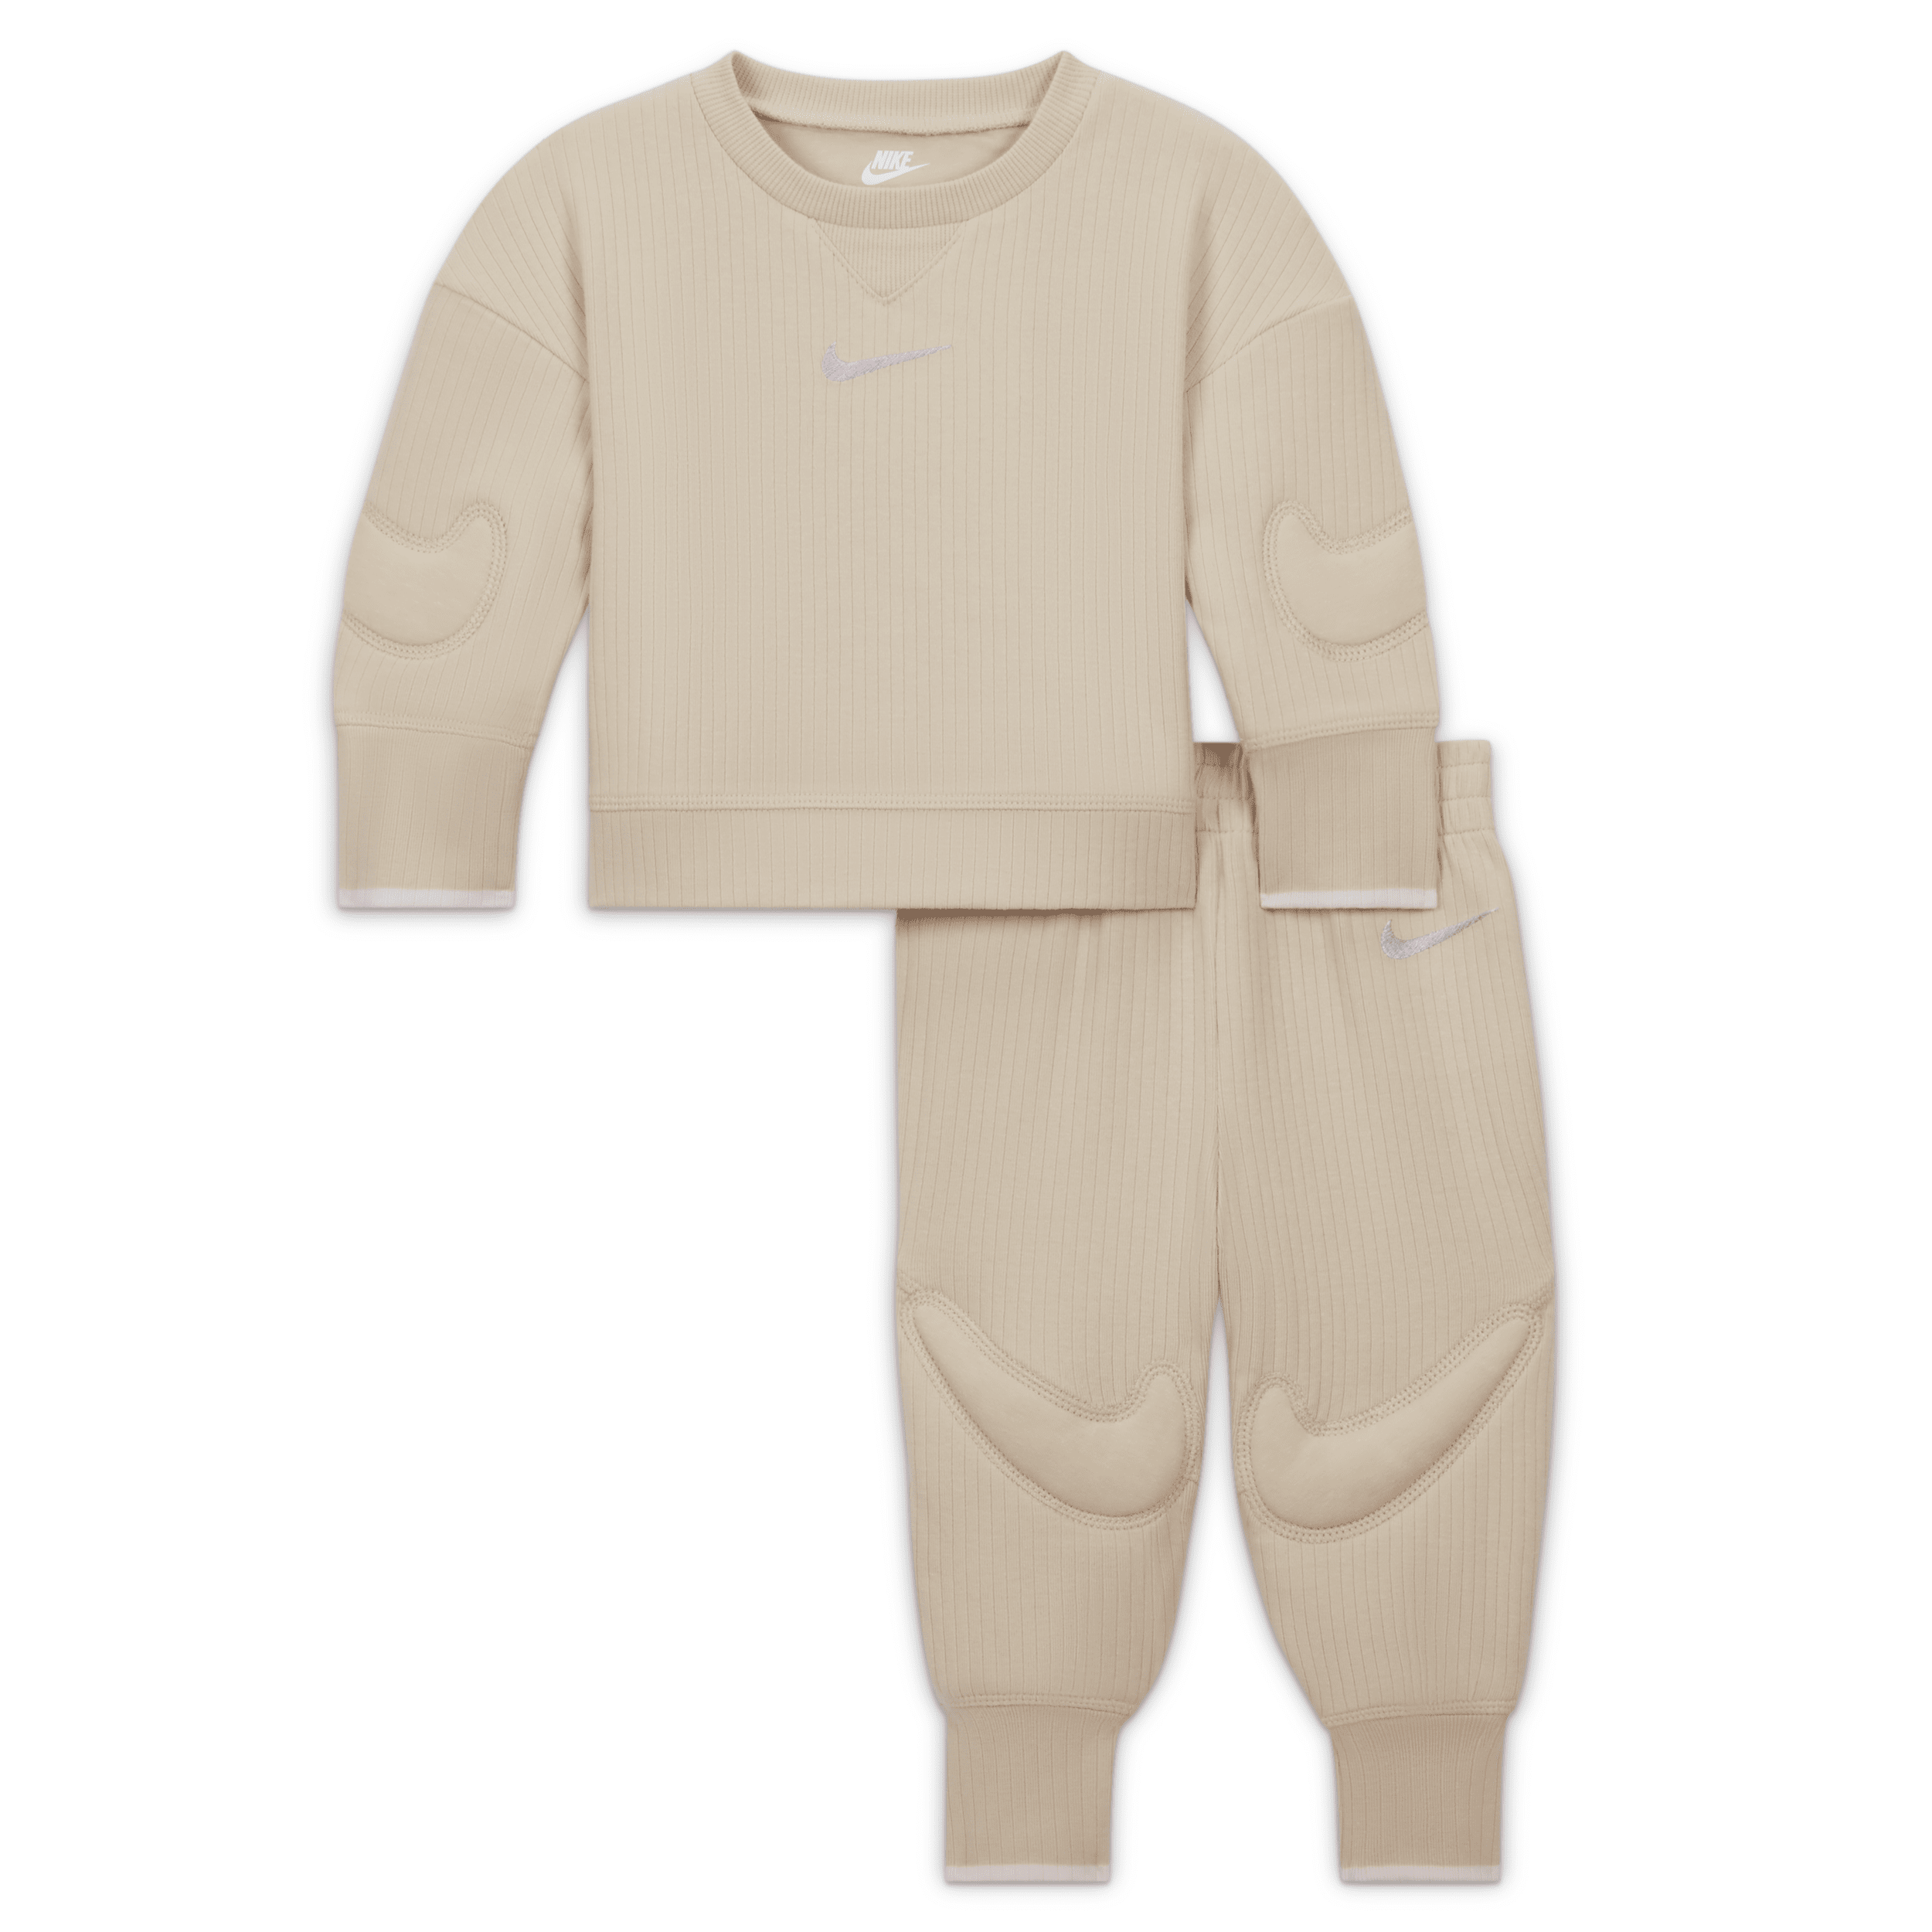 Nike Readyset Baby 2-piece Set In Brown